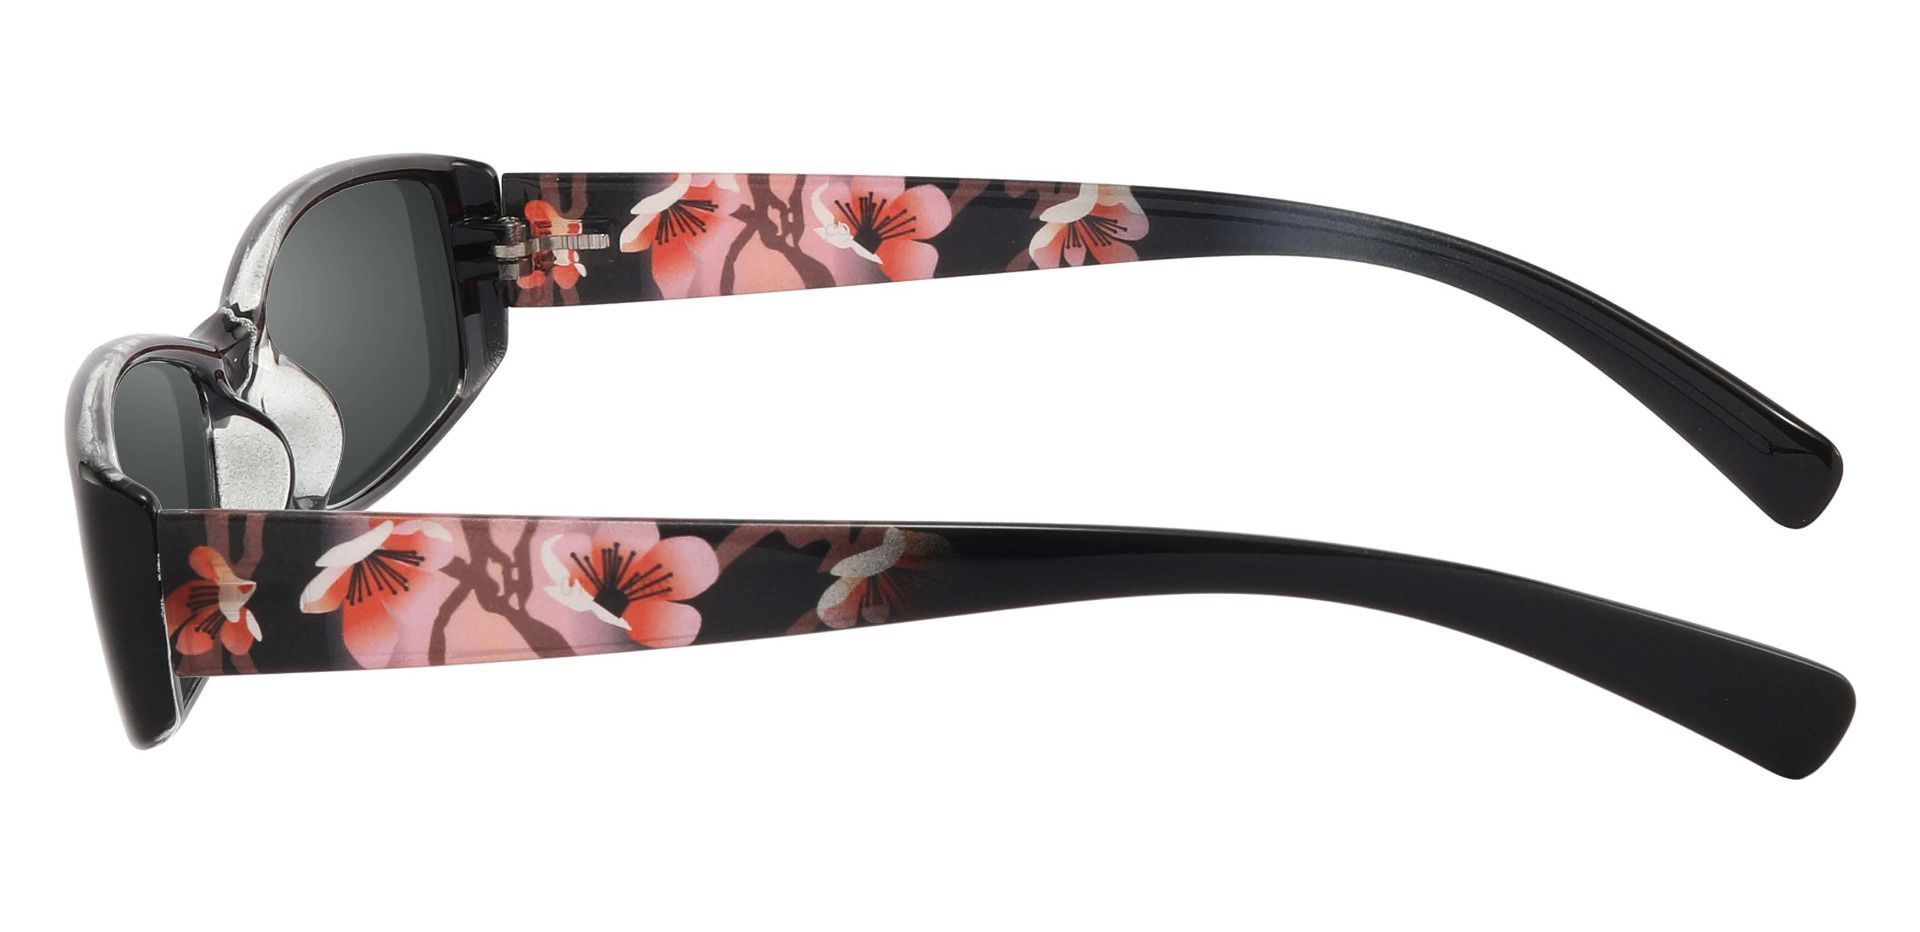 Medora Rectangle Single Vision Sunglasses - Black Frame With Gray Lenses